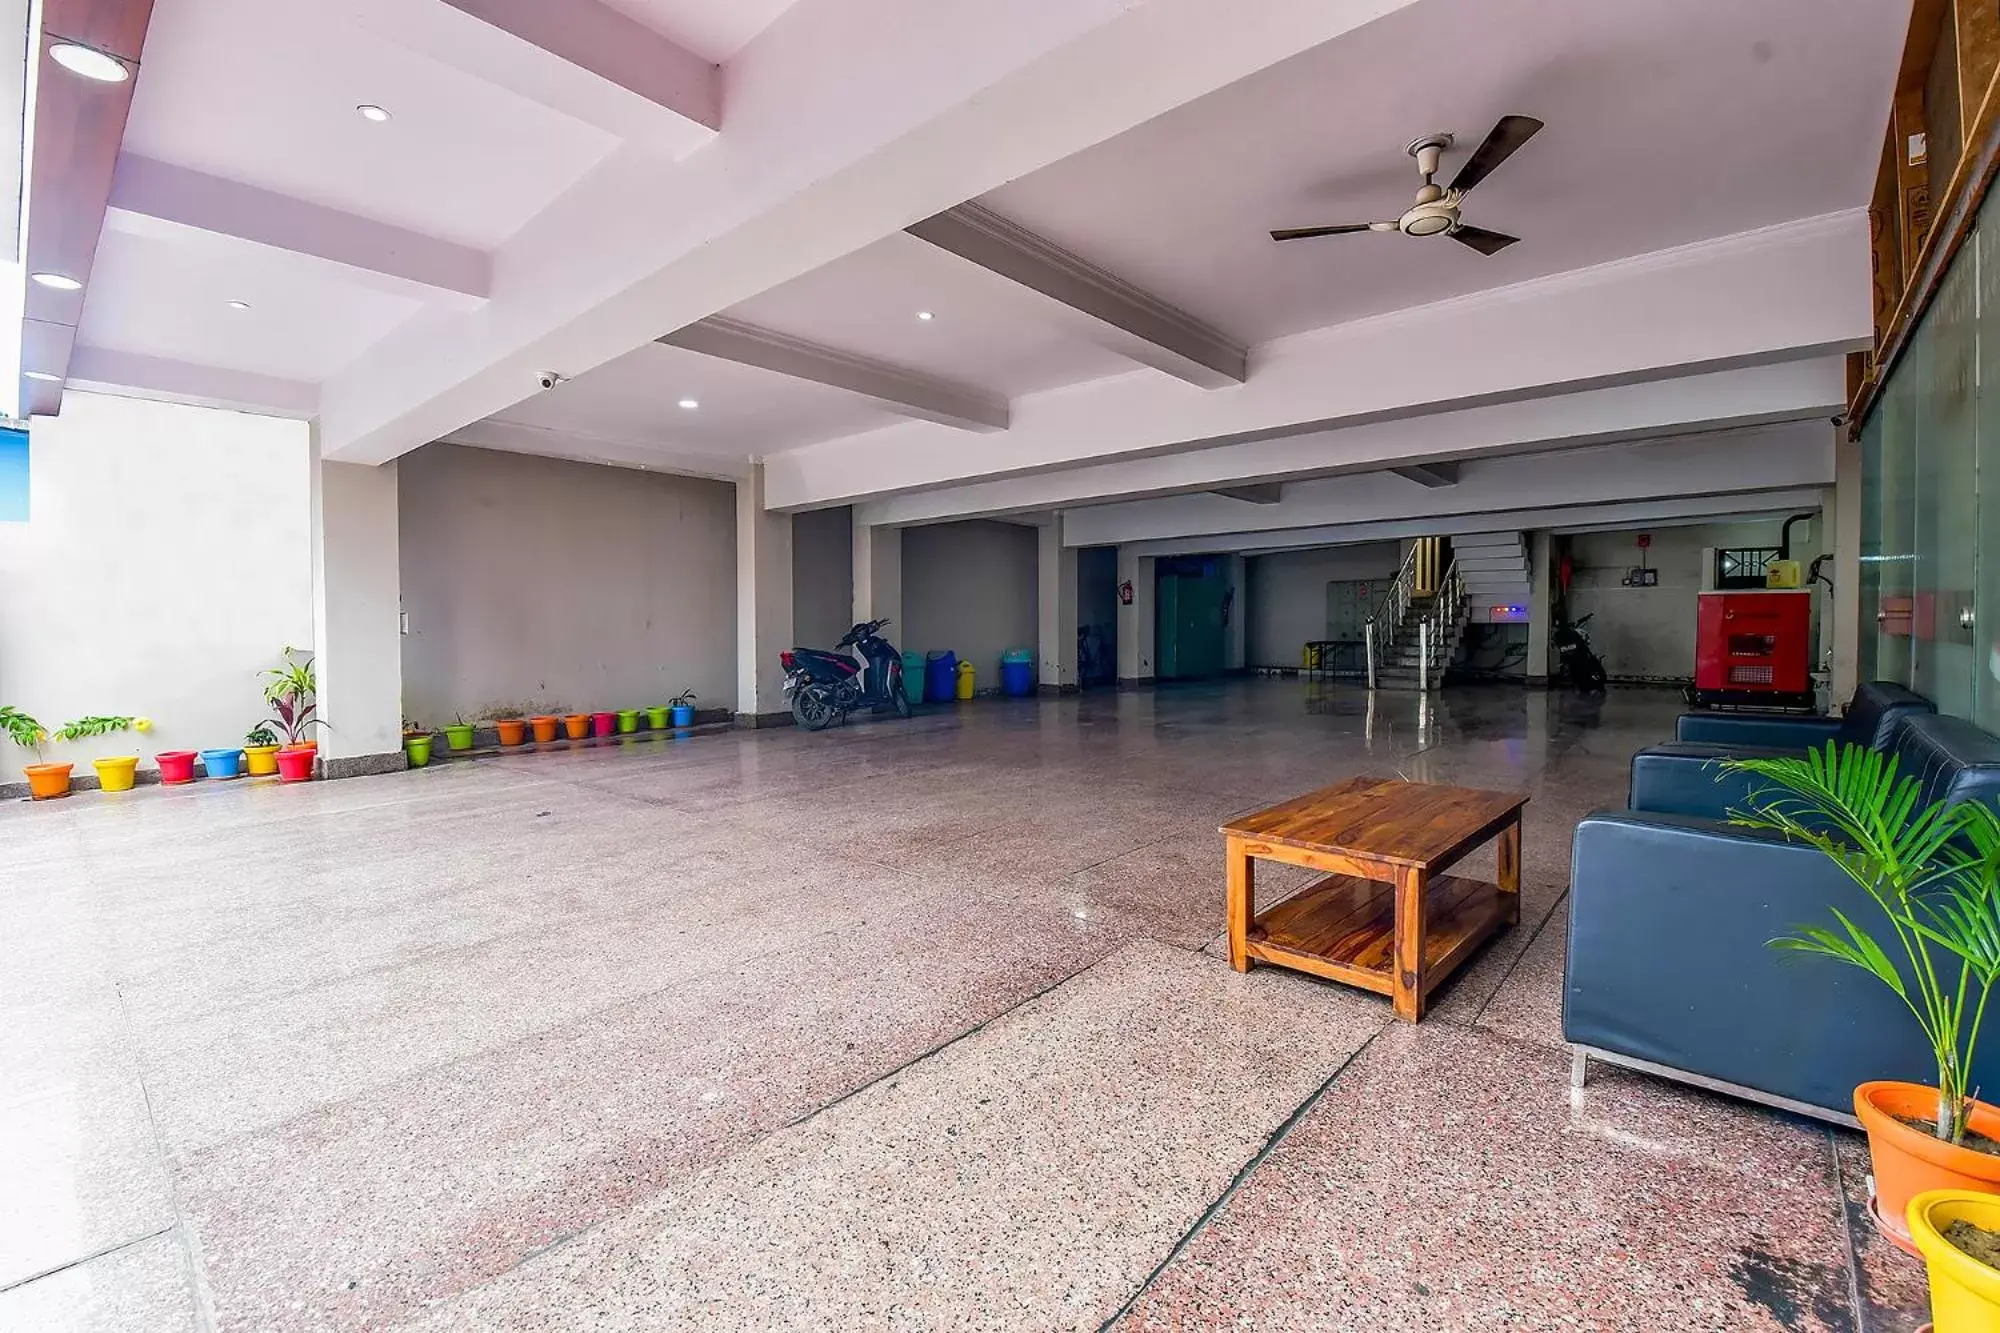 Lobby or reception in FabHotel Mayank Residency